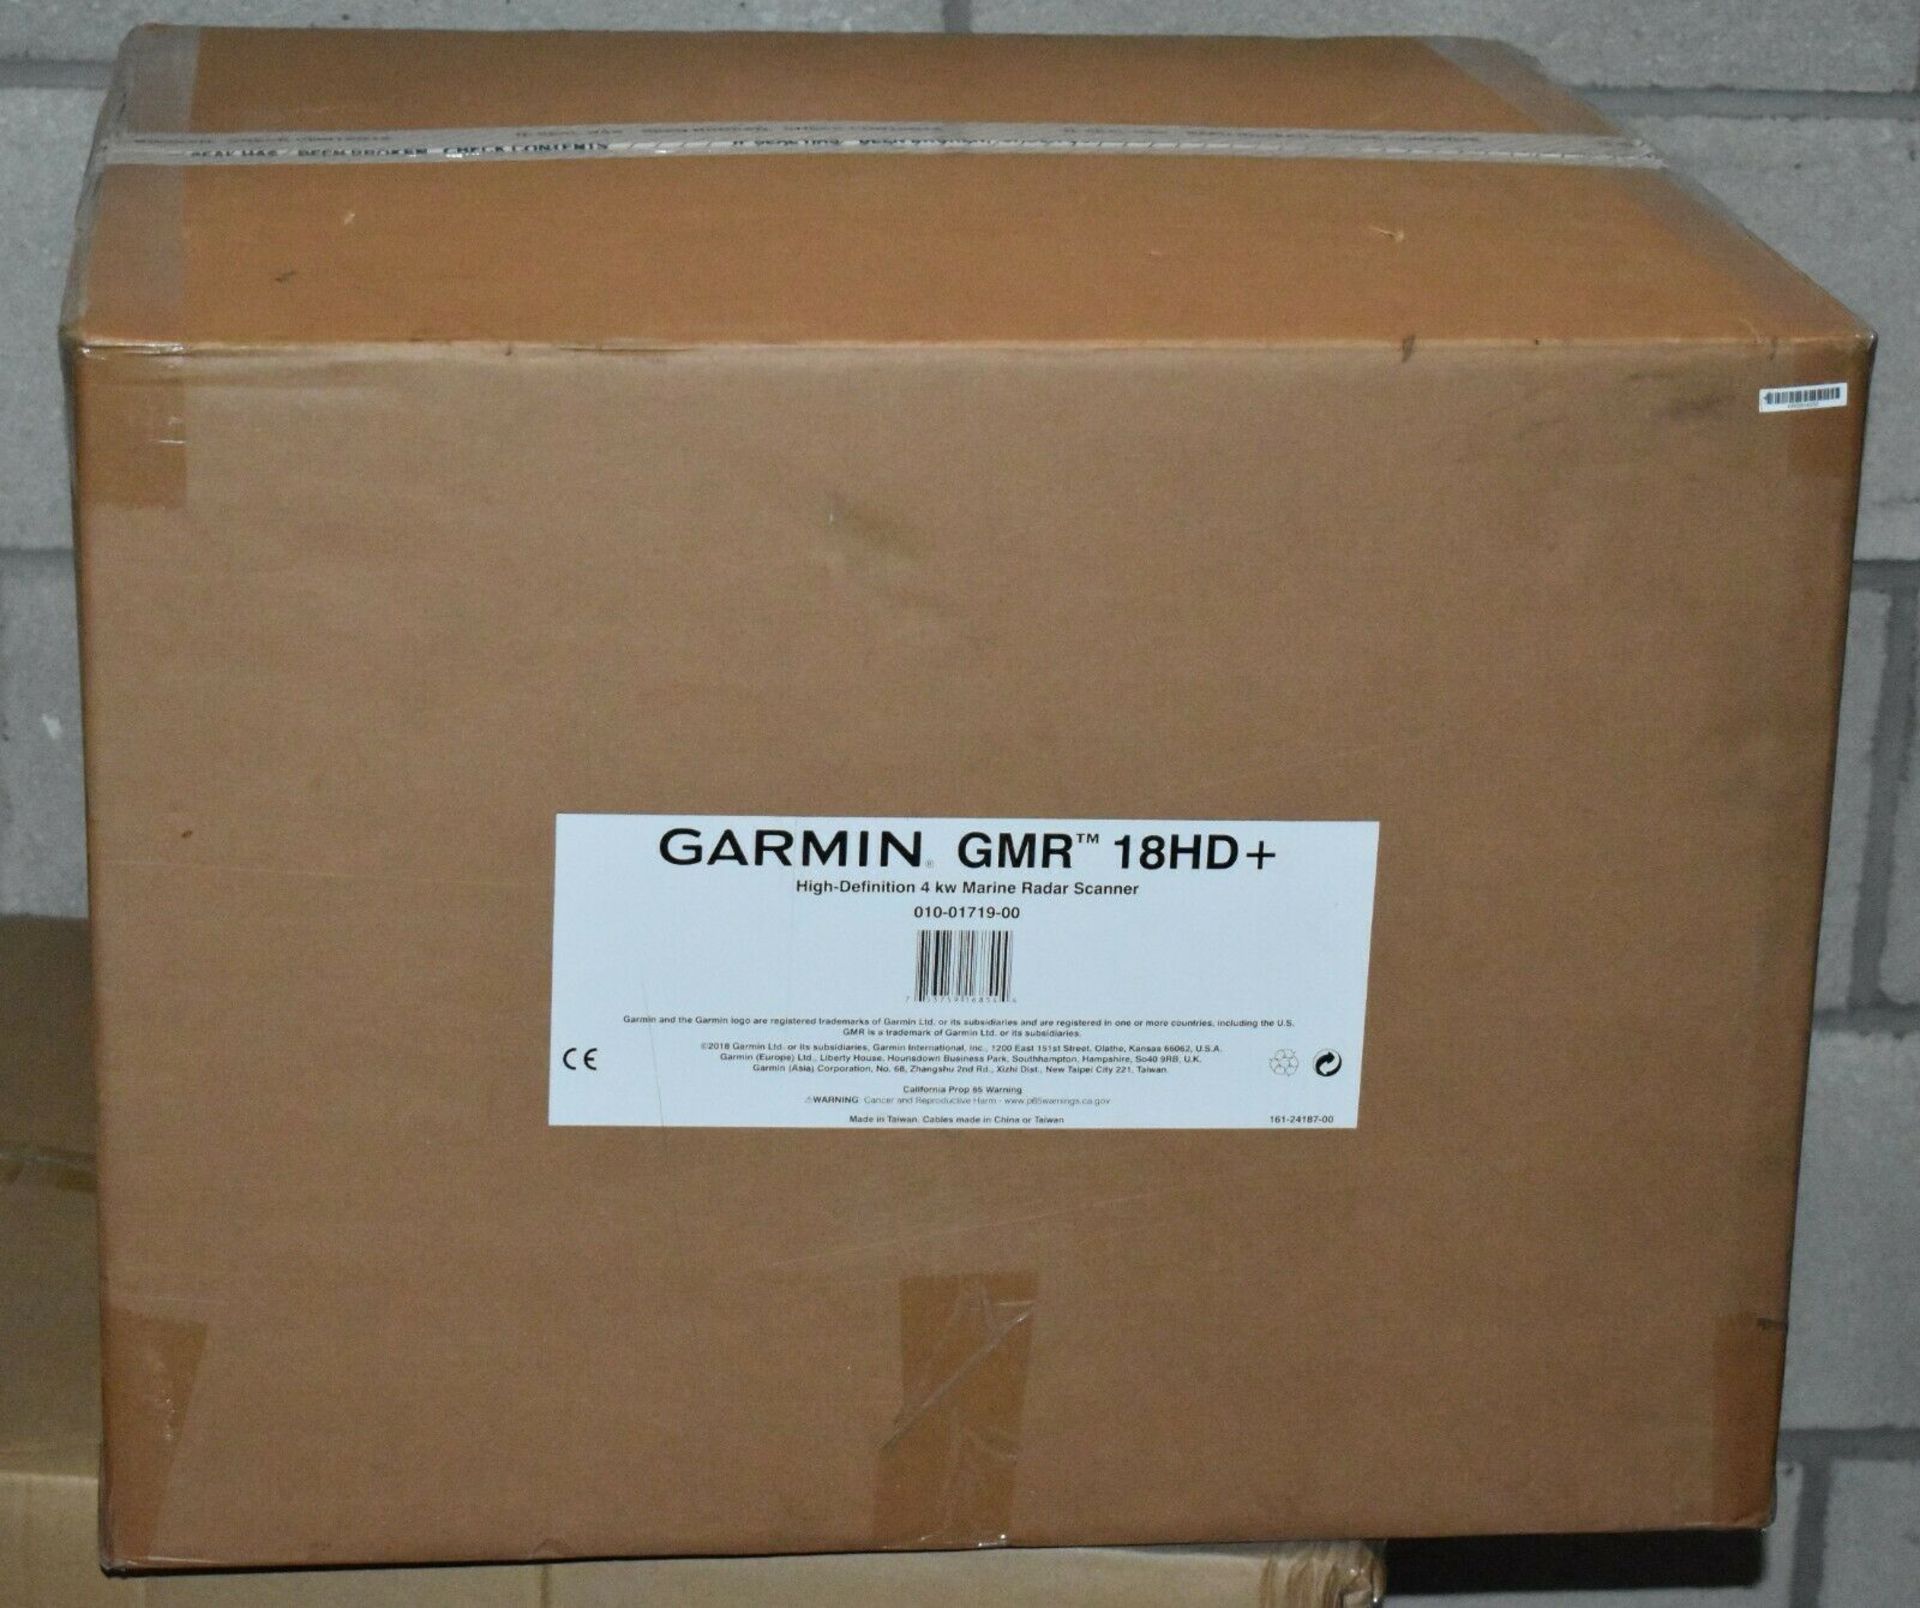 1 x Garmin GMR 18 HD+ Radome Compact Dome Dynamic Radar (18" - 4 kW) - Model Number 010-01719-00 - - Image 4 of 5